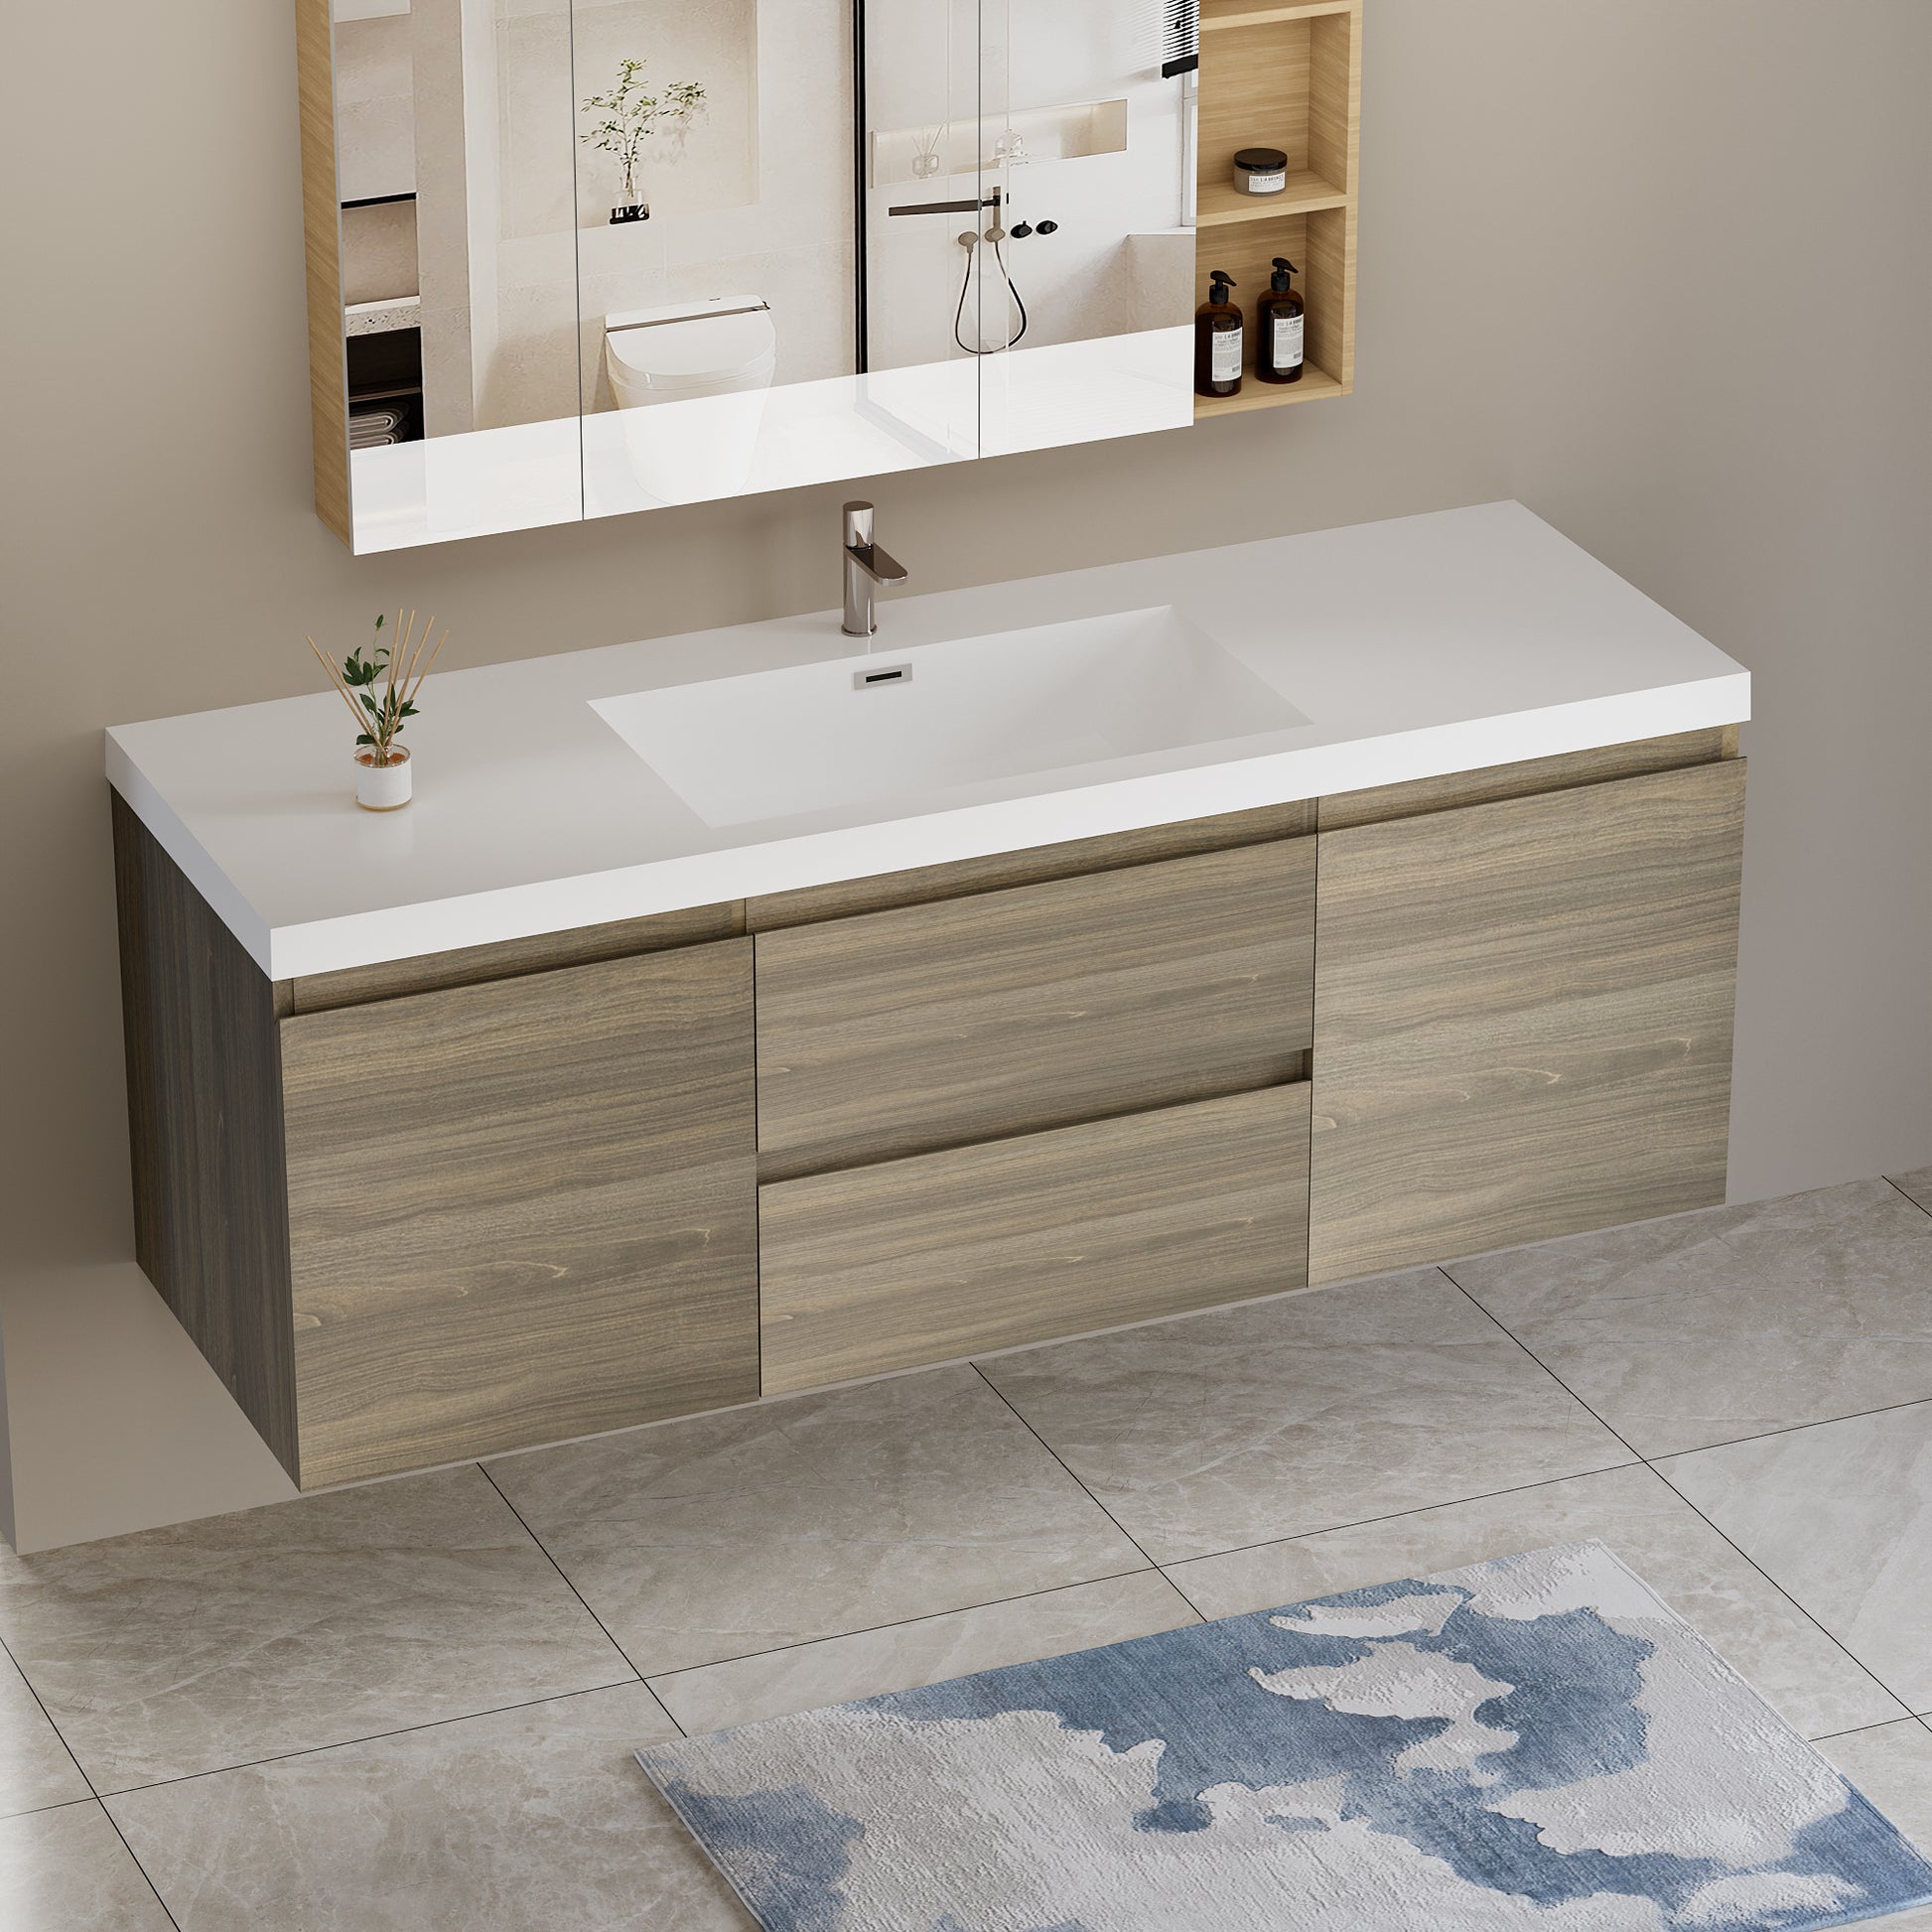 60" Floating Bathroom Vanity with Sink, Modern Wall 2-grey-2-bathroom-wall mounted-melamine